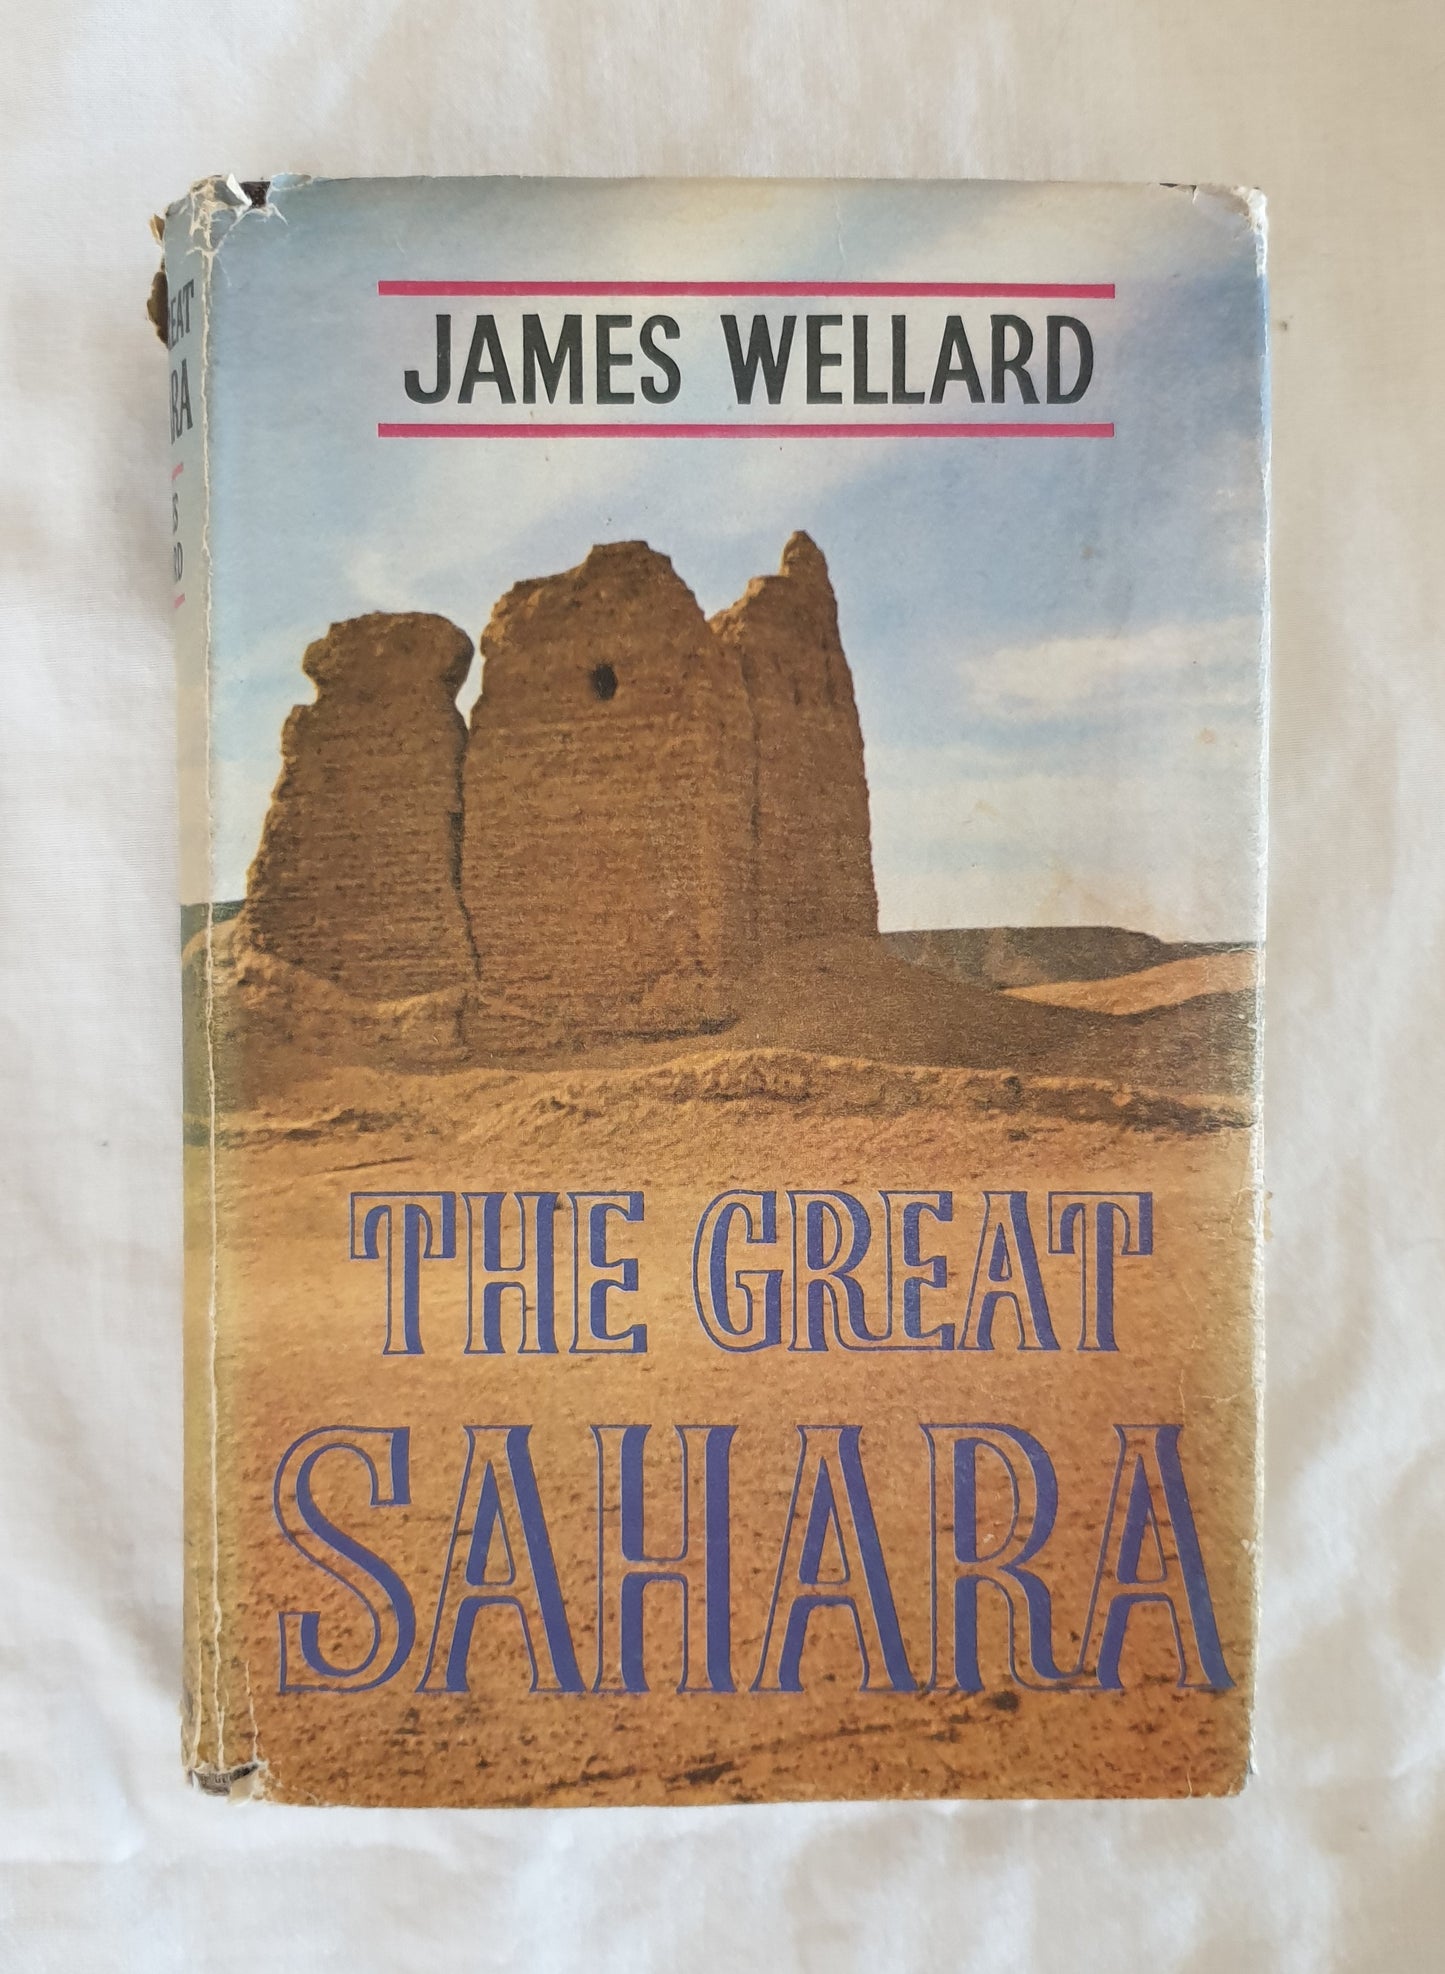 The Great Sahara by James Wellard